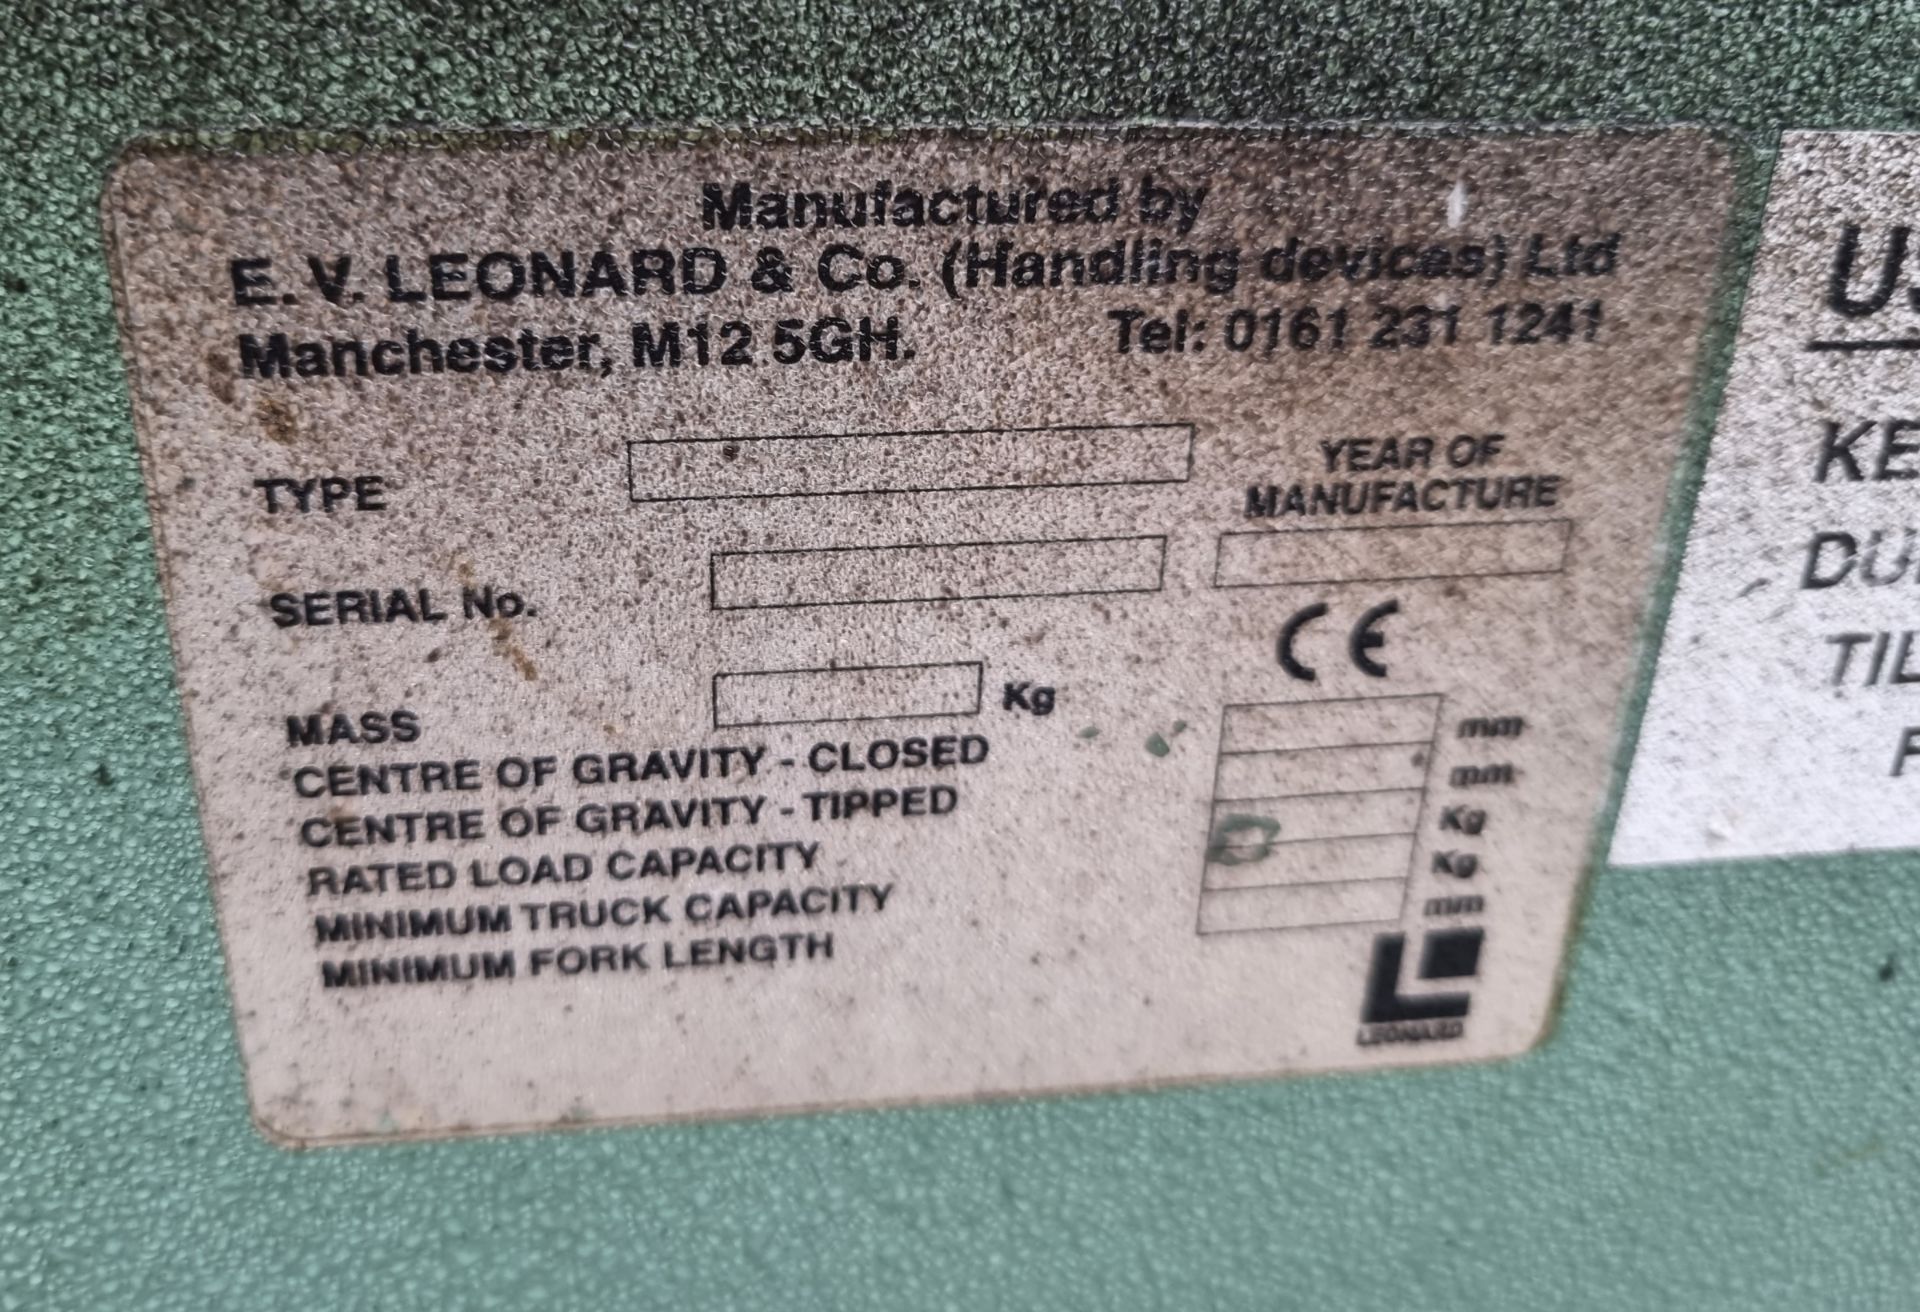 E.V. Leonard & Co Ltd forklift tipping skip on castors - Image 5 of 5